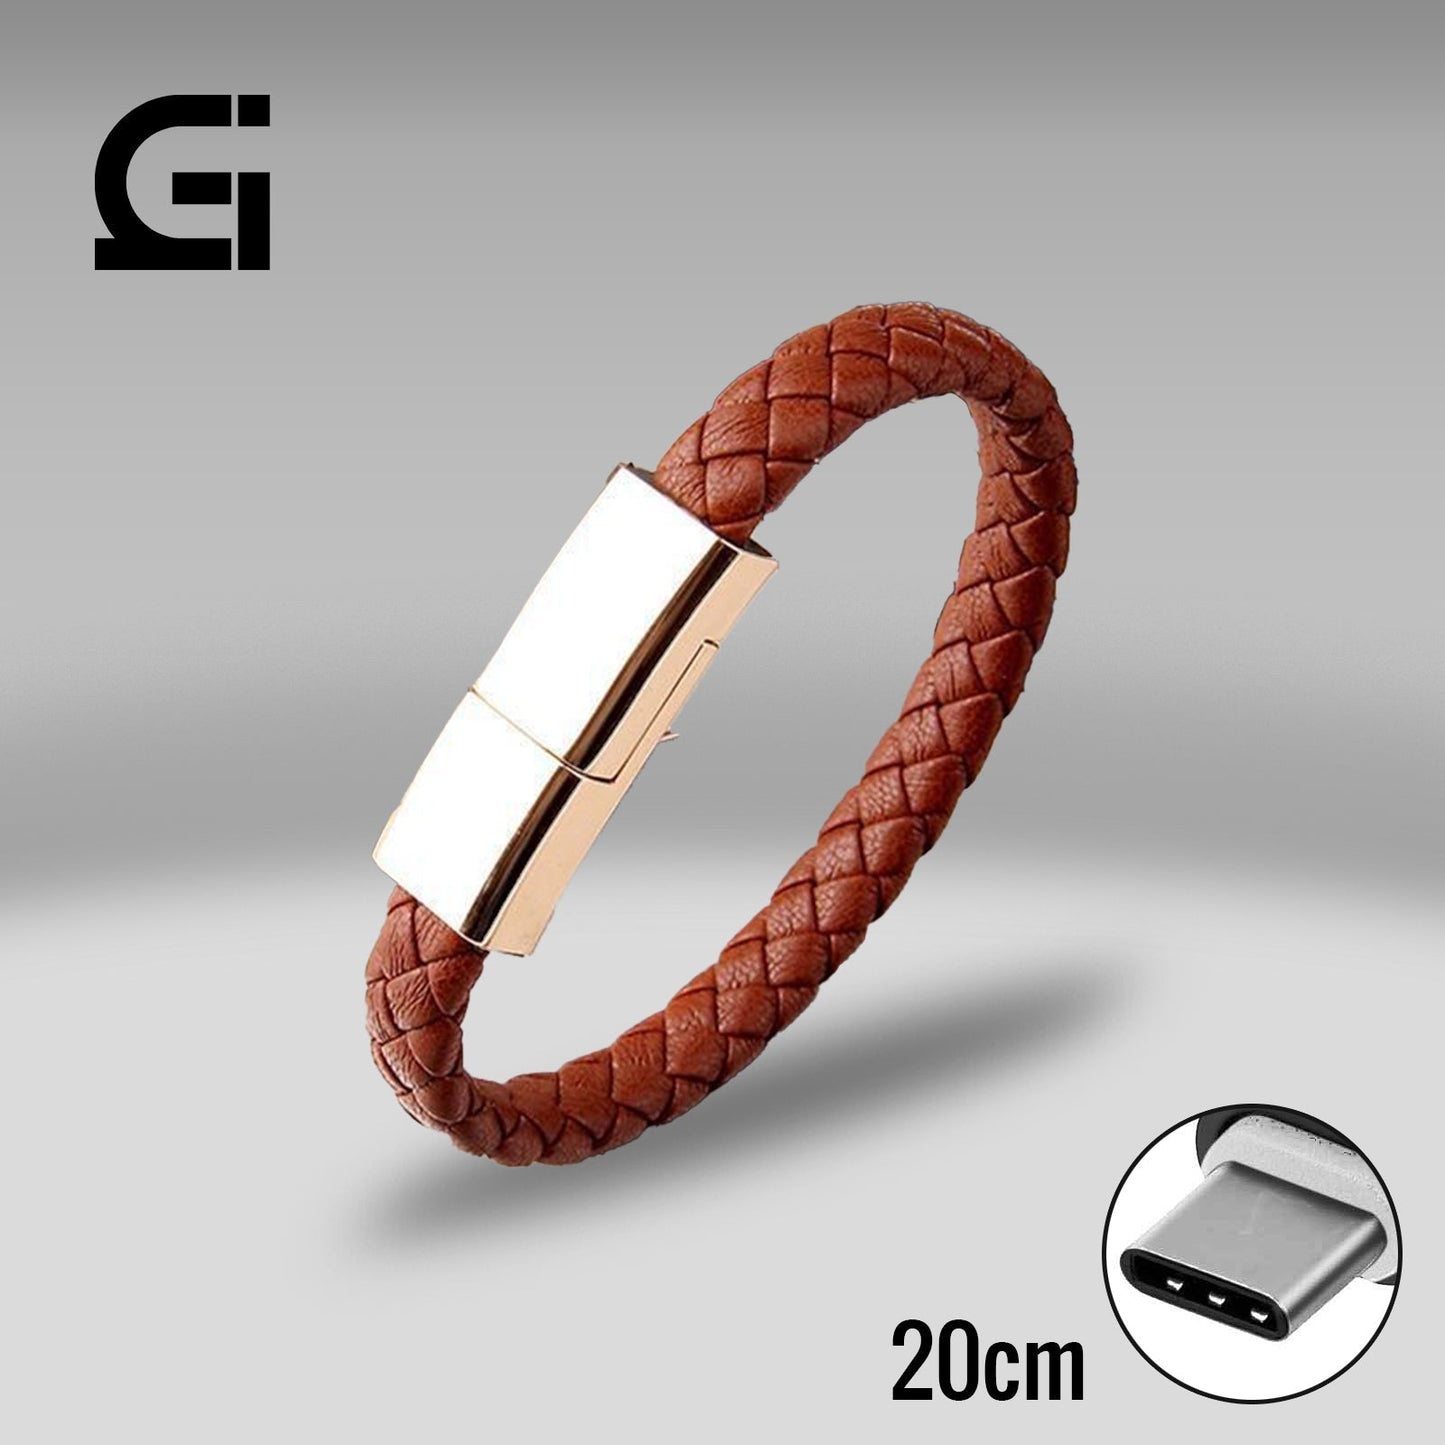 Bracelet USB "Snake" - Gadget-In-Utile